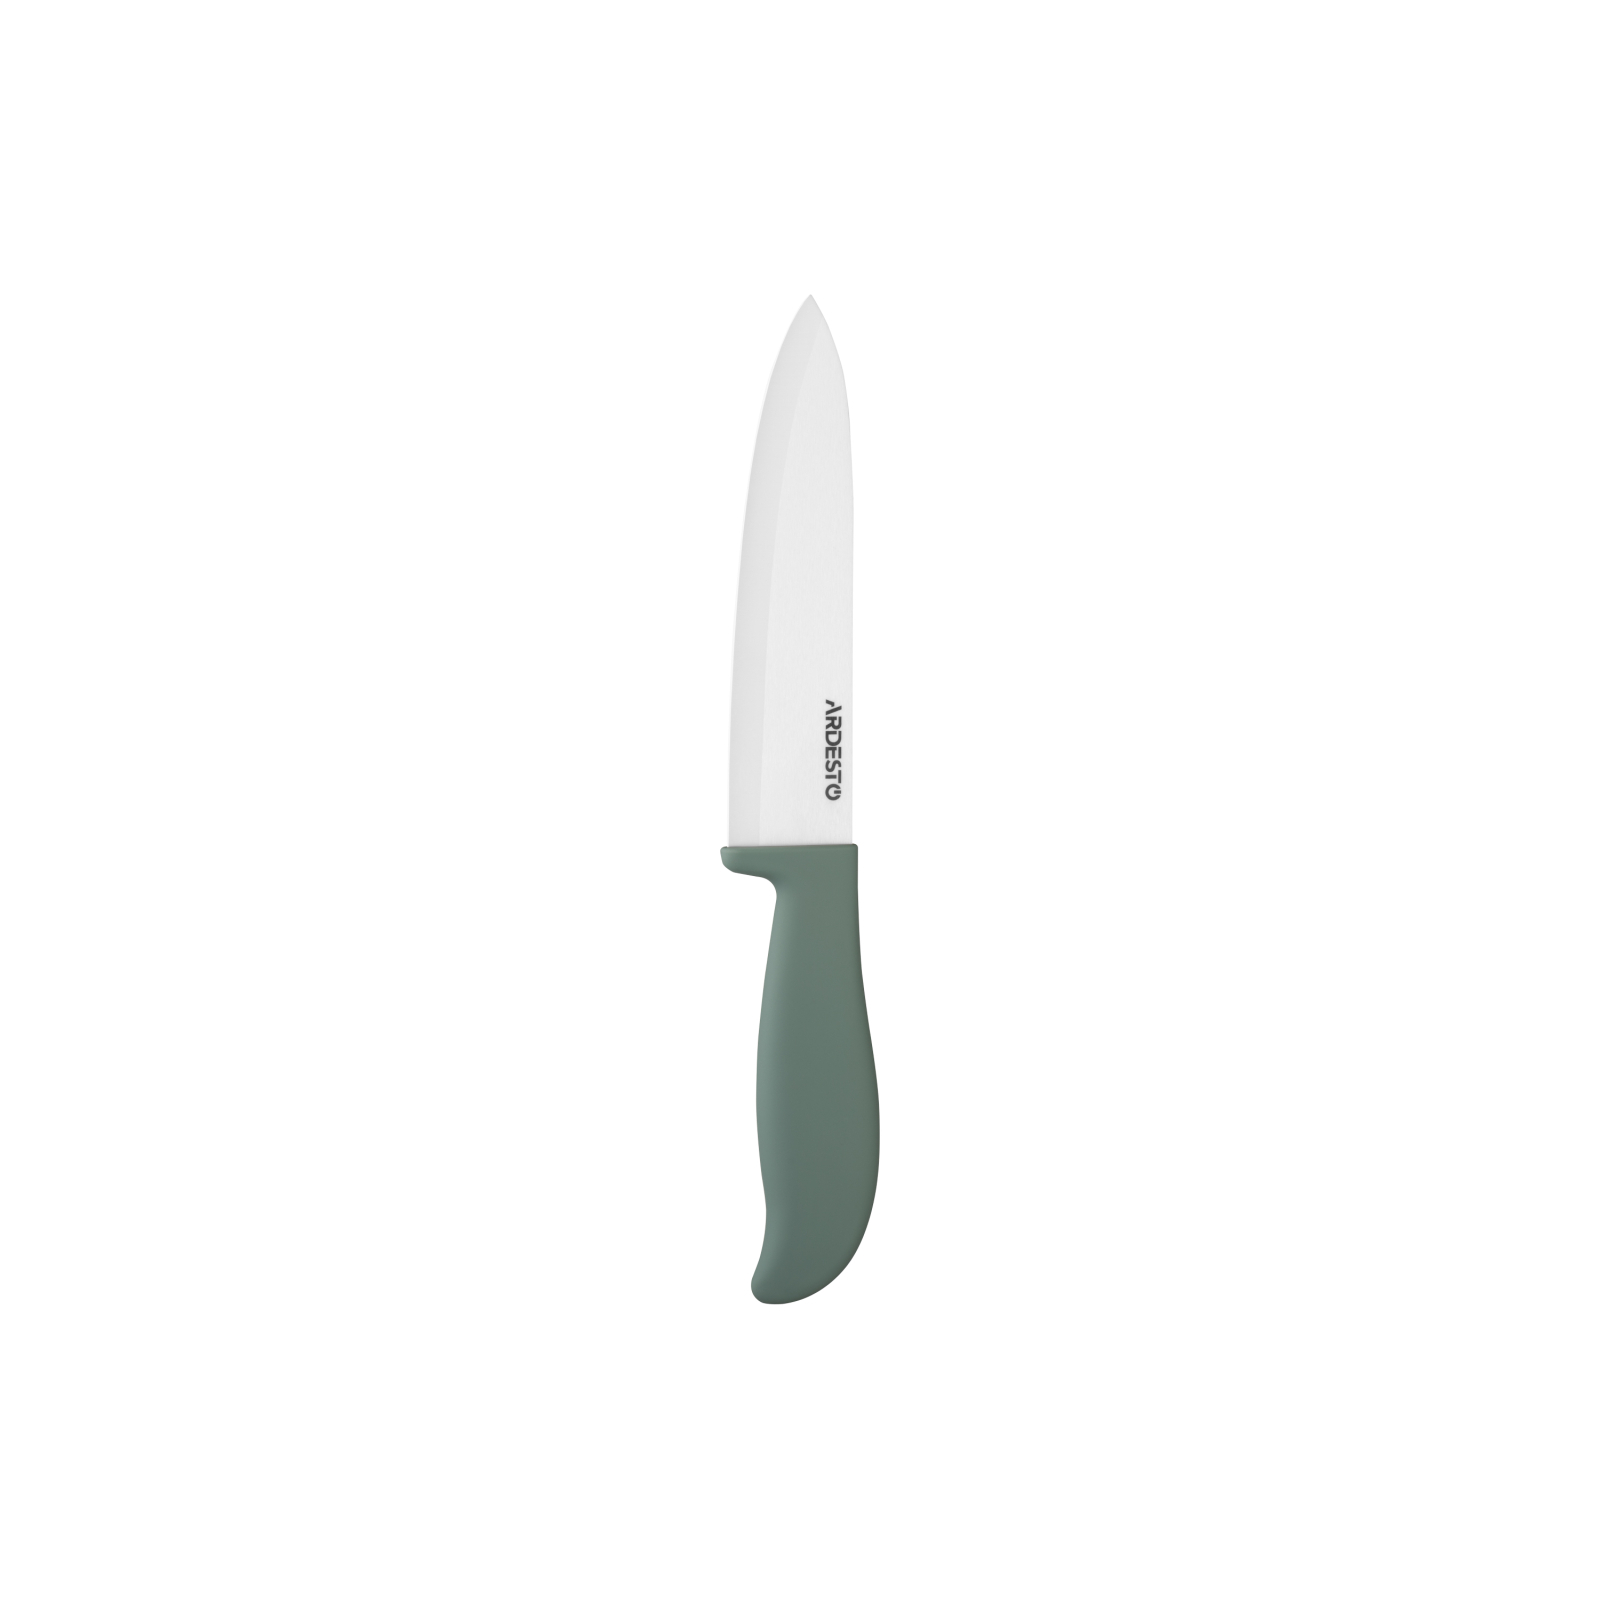 Кухонный нож Ardesto Fresh 27.5 см Black (AR2127CB)